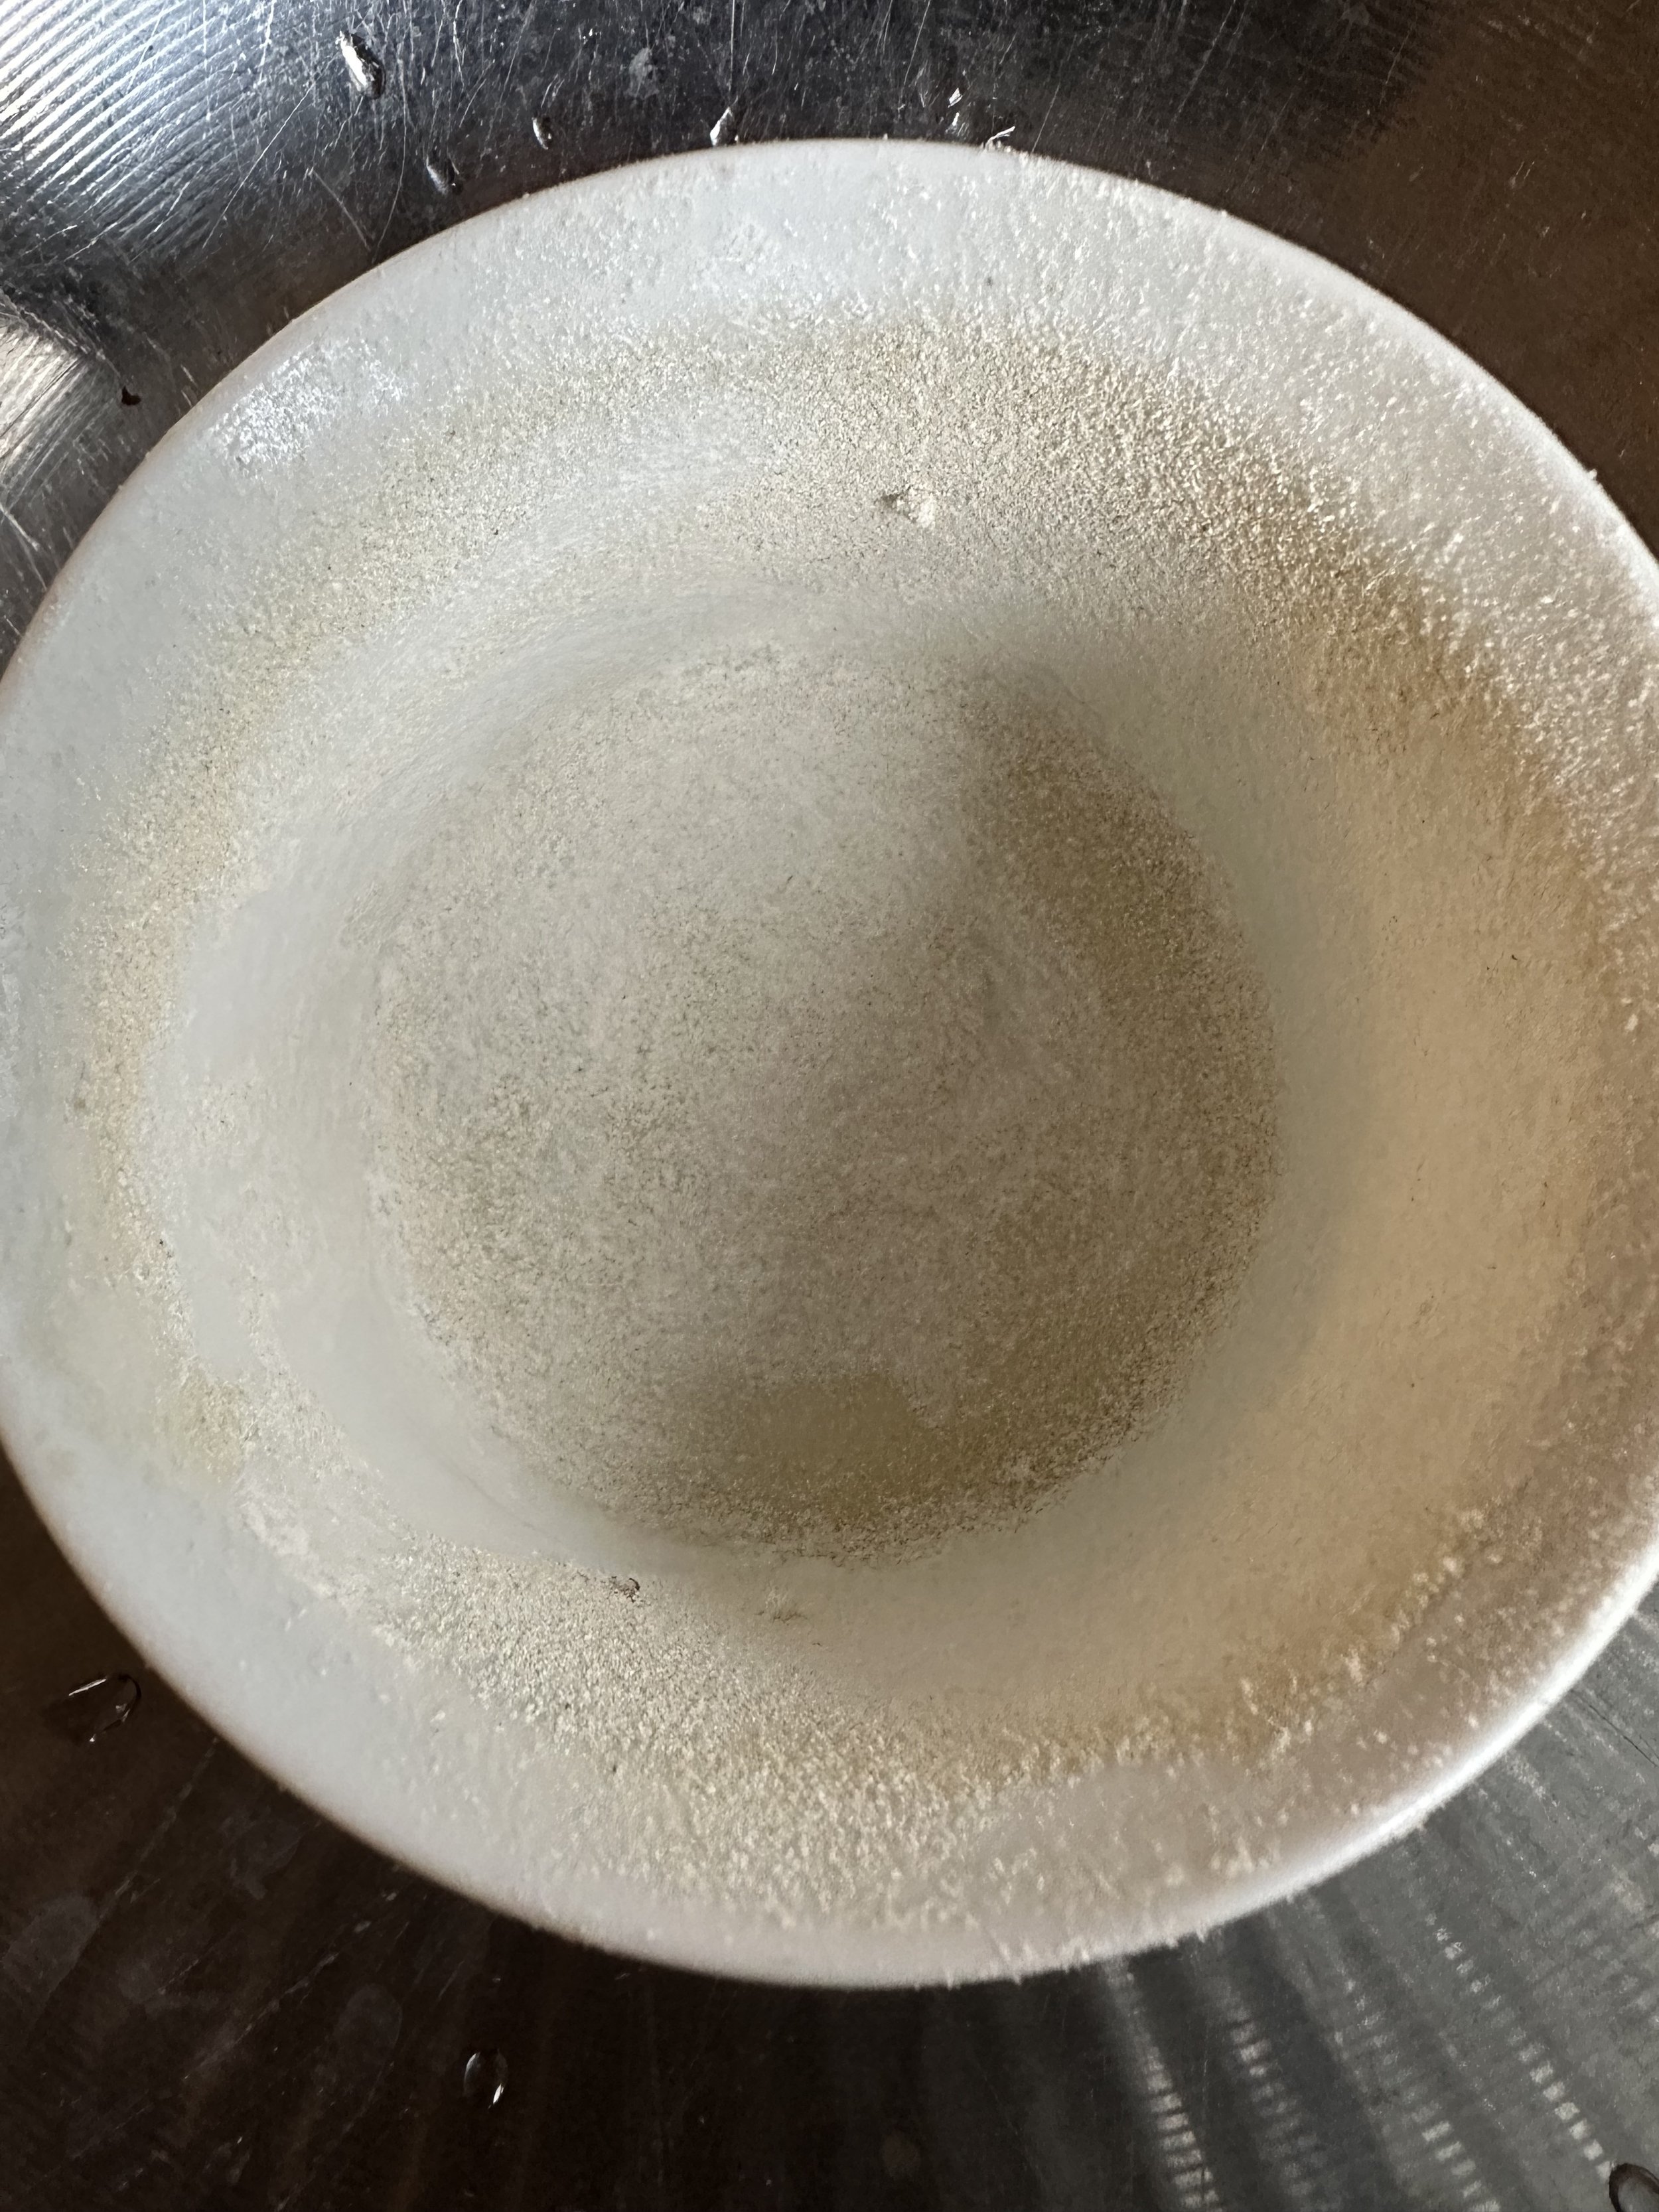 Oil + flour a souffle dish